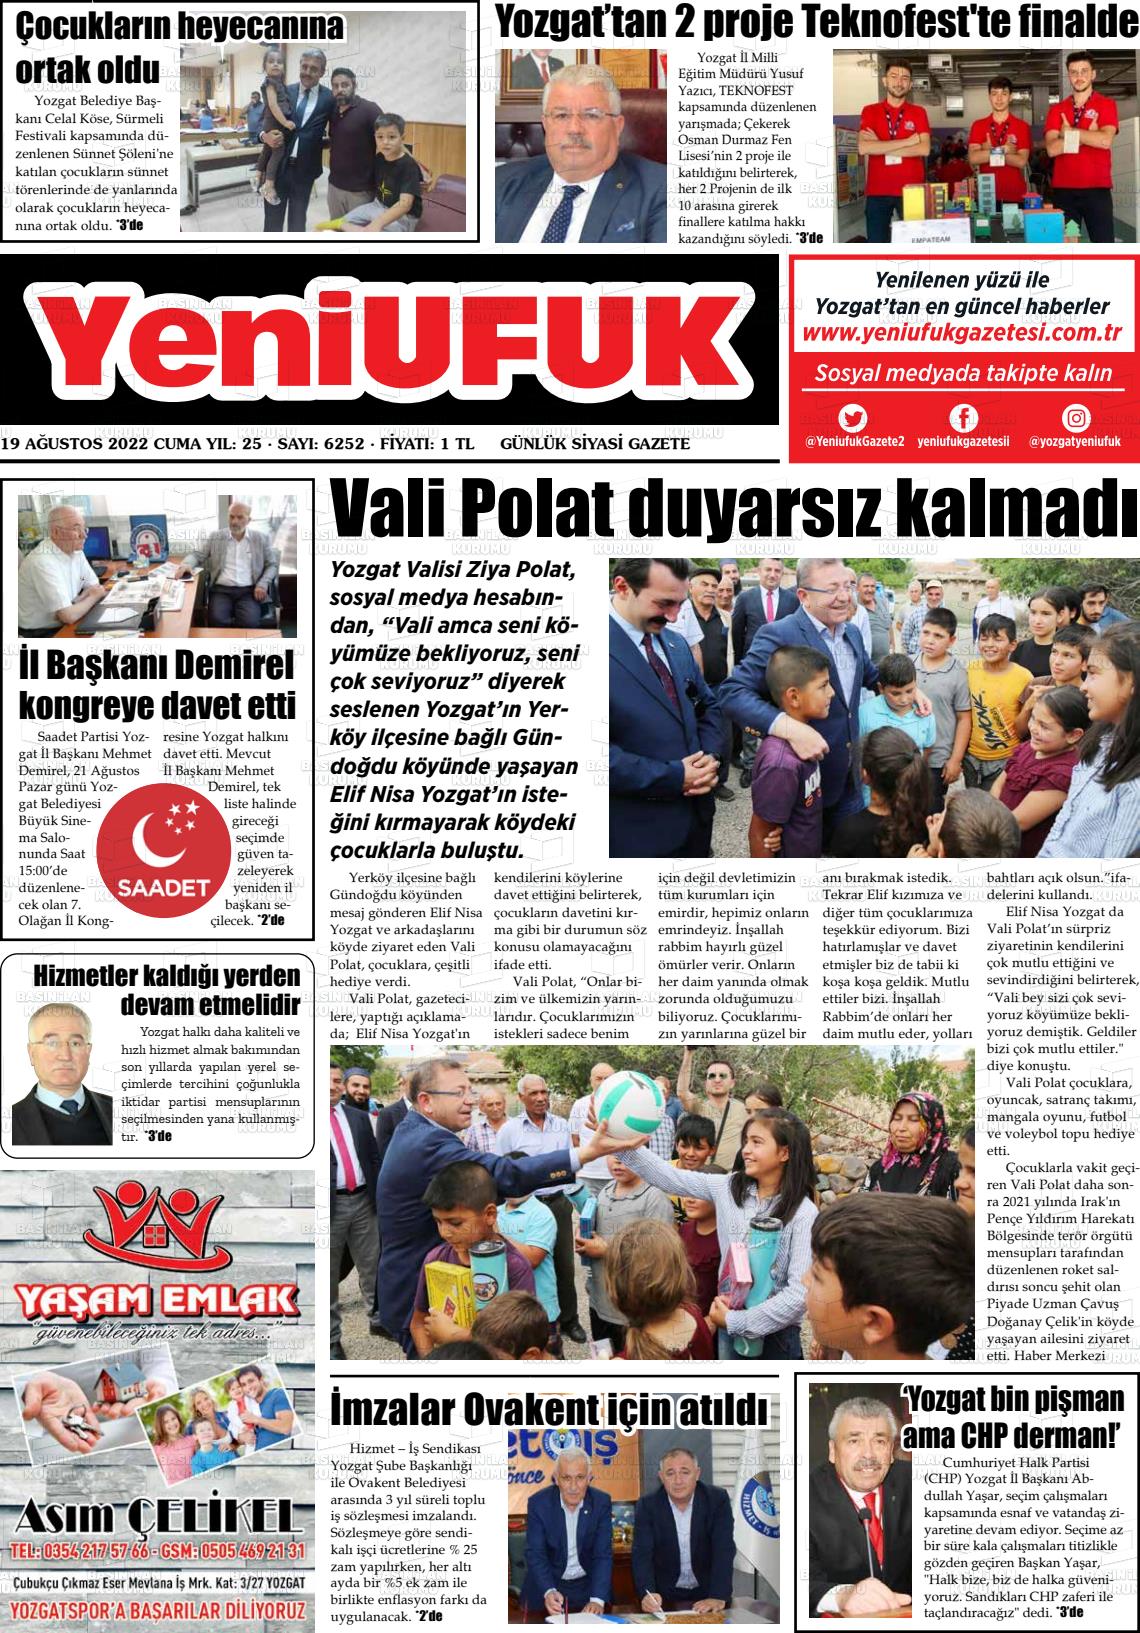 19 Ağustos 2022 Yozgat Yeni Ufuk Gazete Manşeti